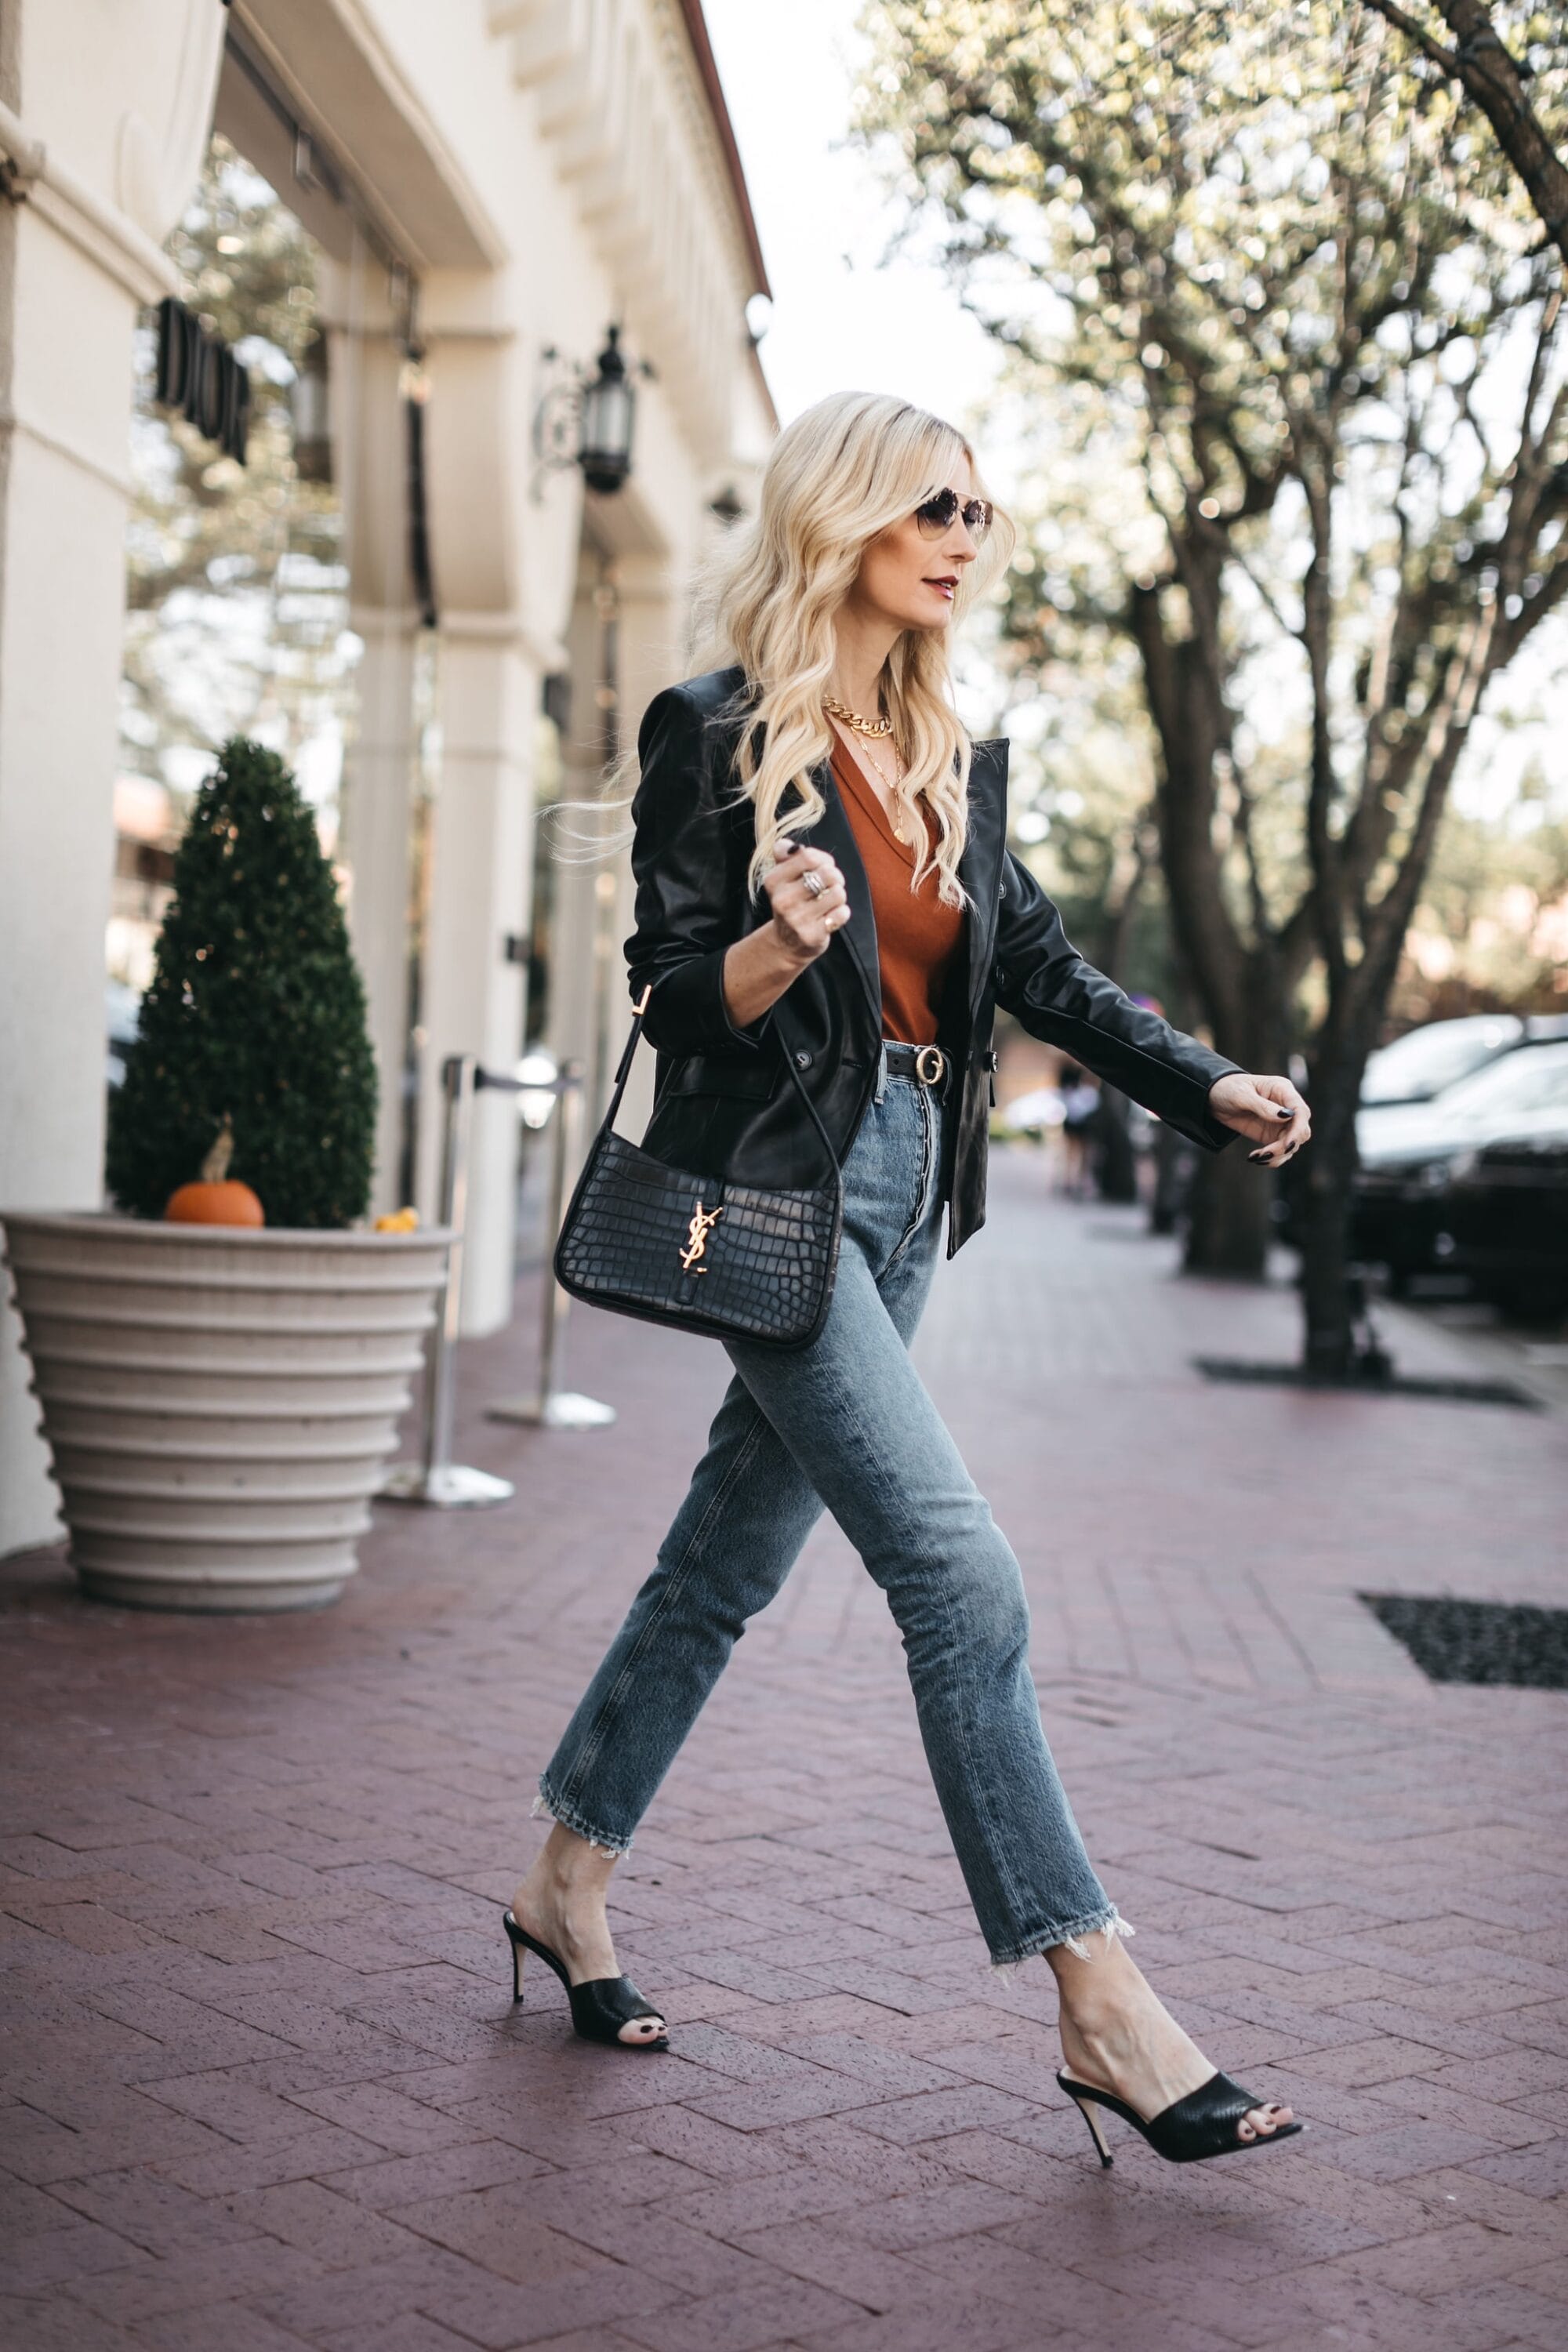 Dallas fashion blogger showcasing 5 items classy women never wear.